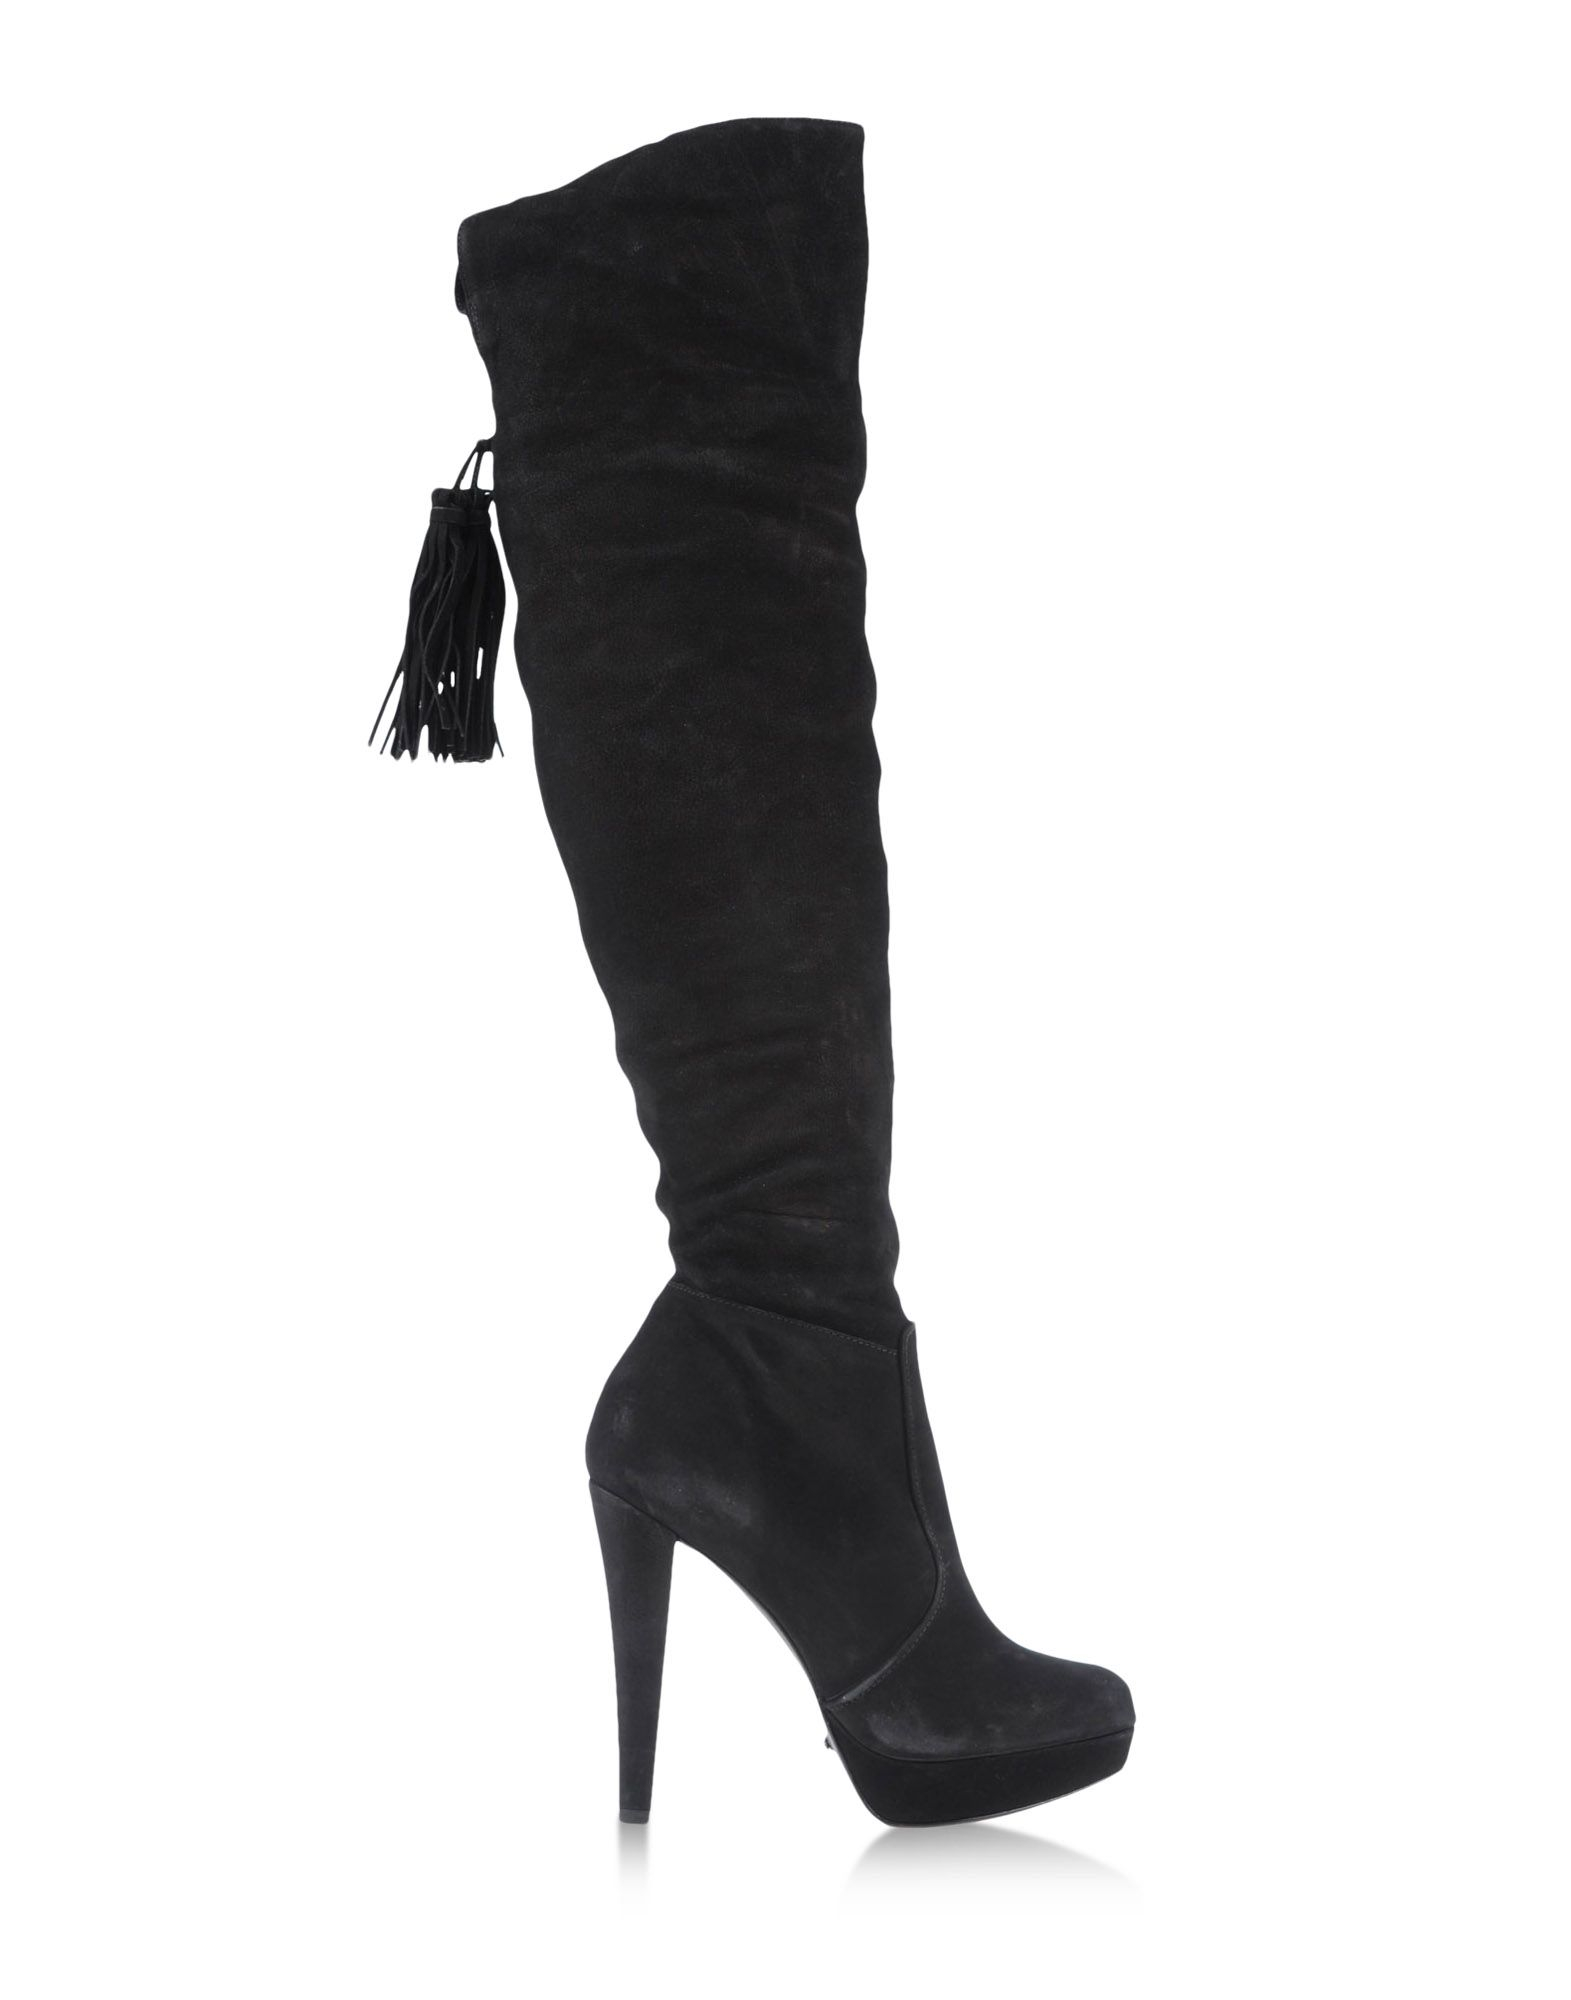 Schutz Over The Knee Boots in Black | Lyst